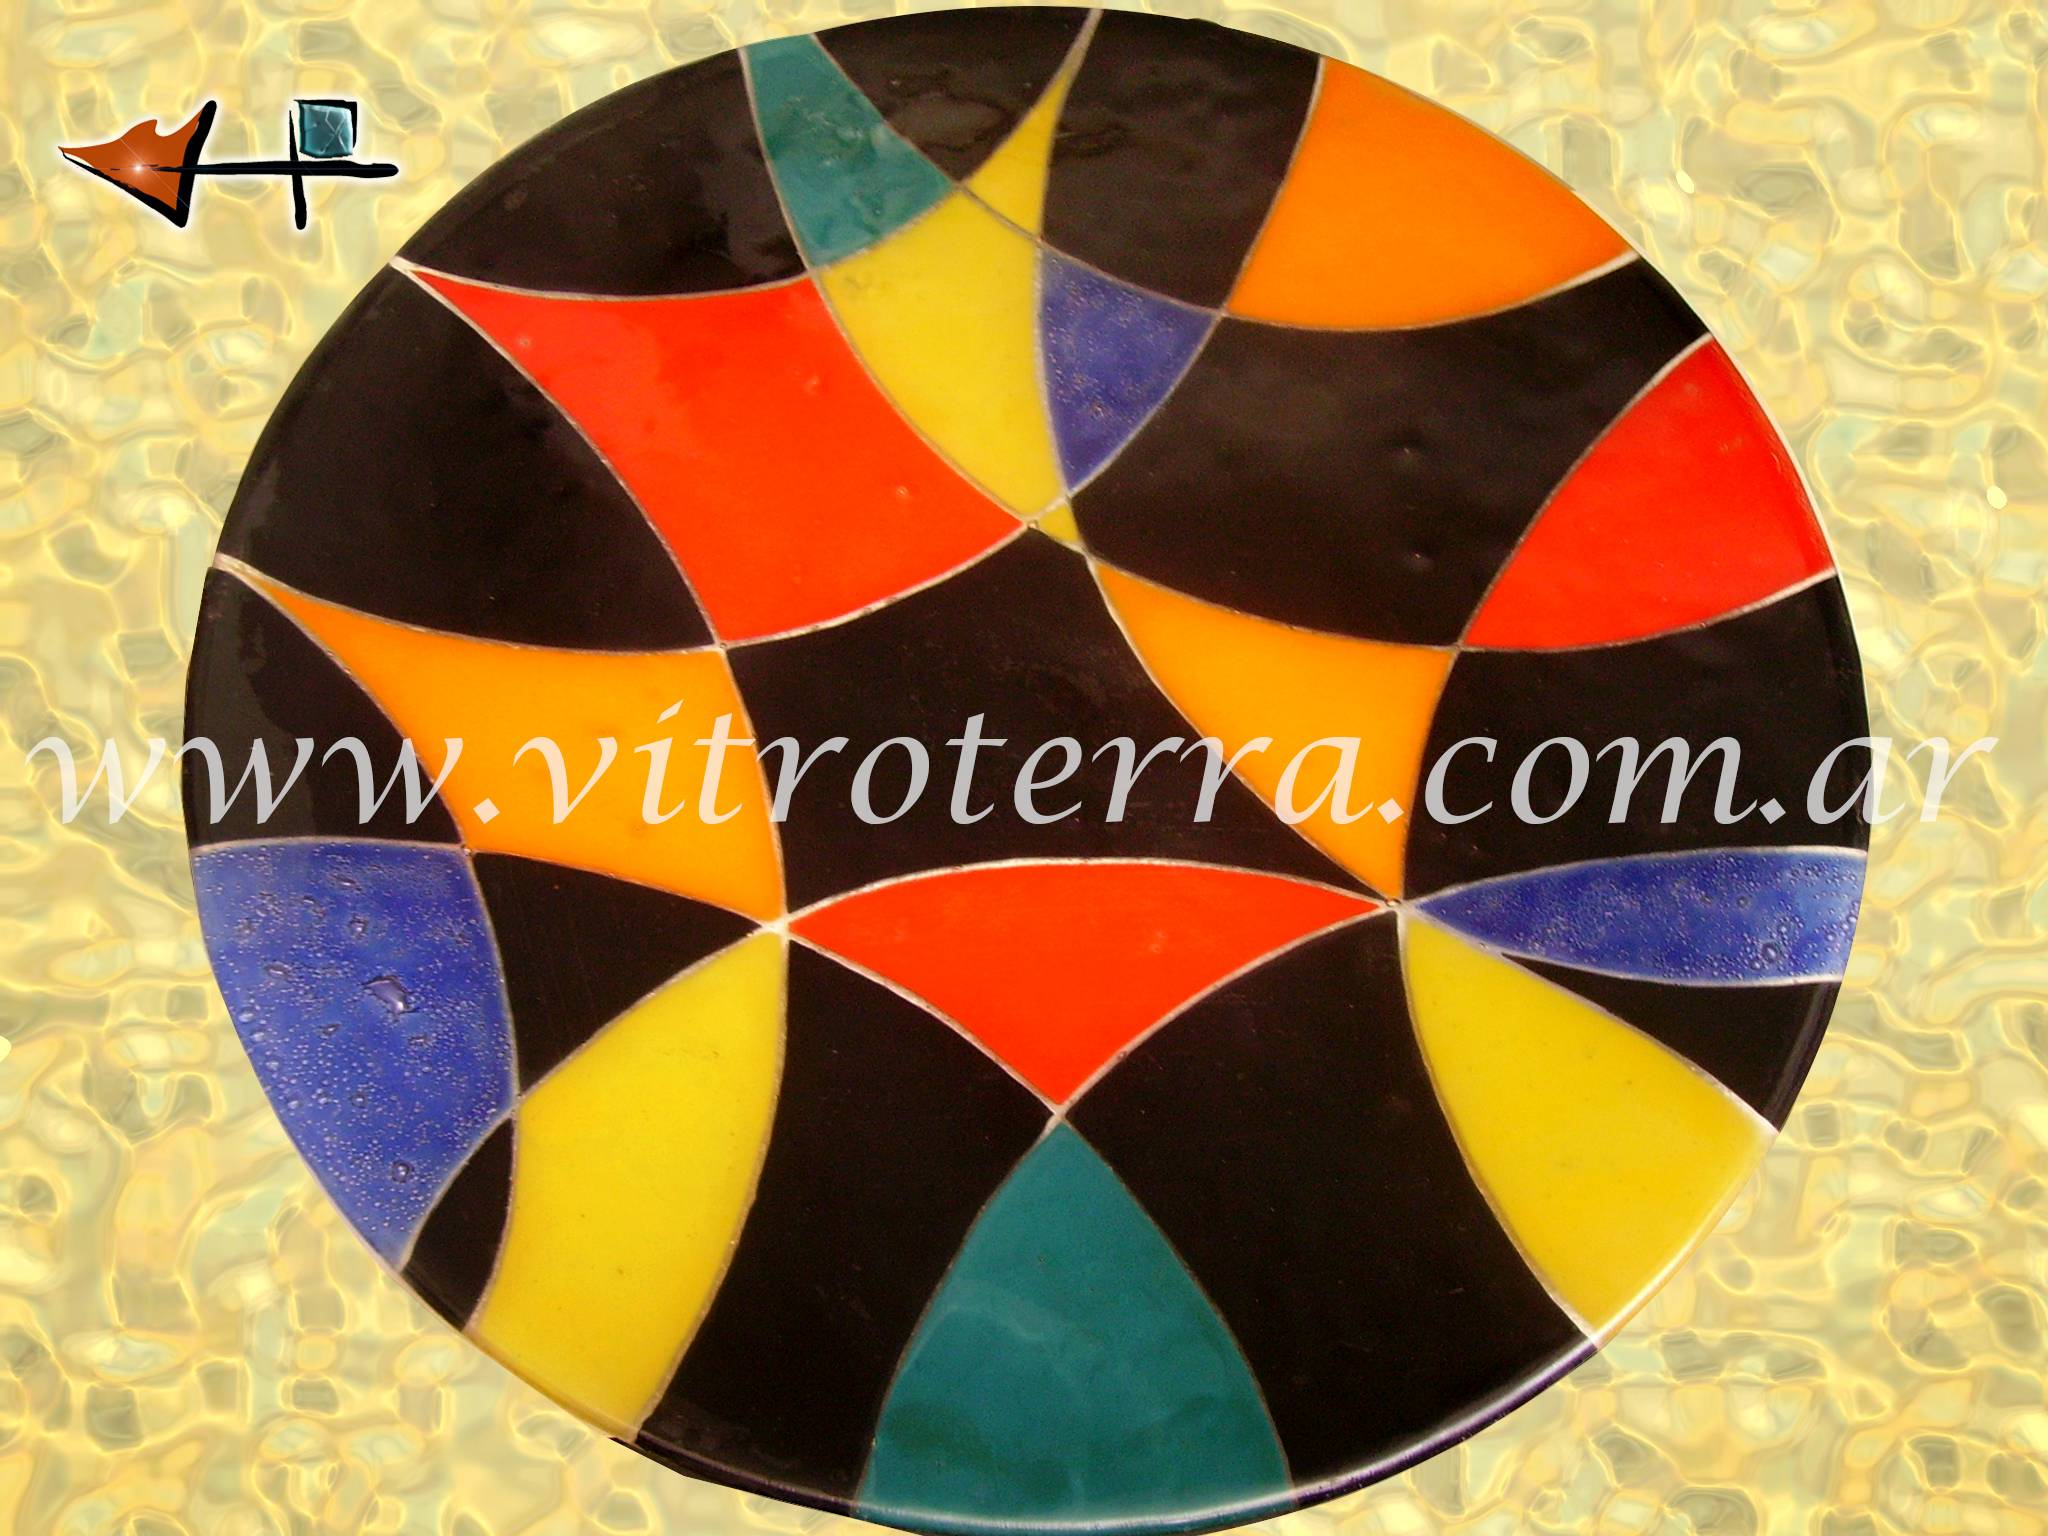 Centro circular de vidrio Color-Miró